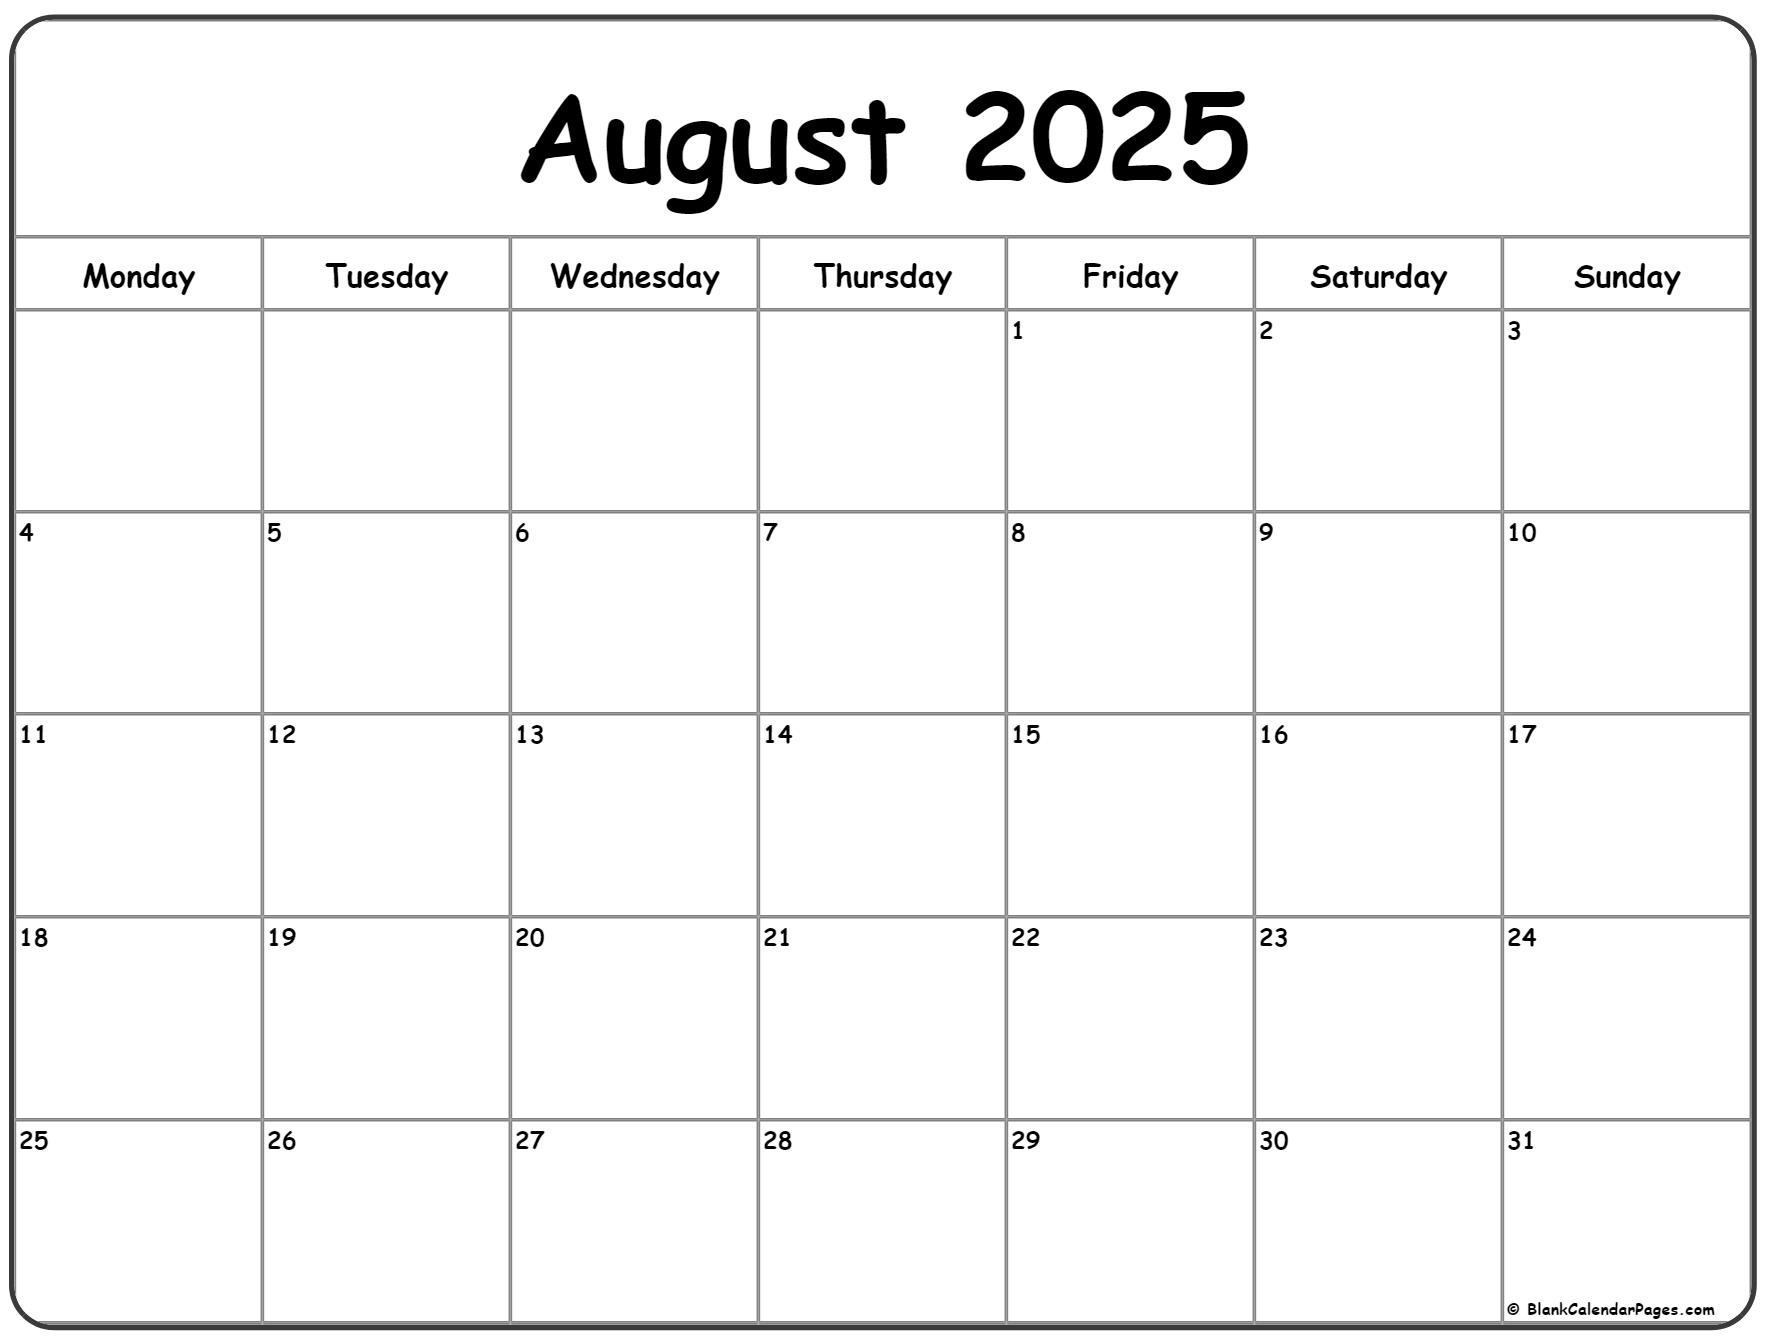 August 2025 Monday calendar. Monday to Sunday